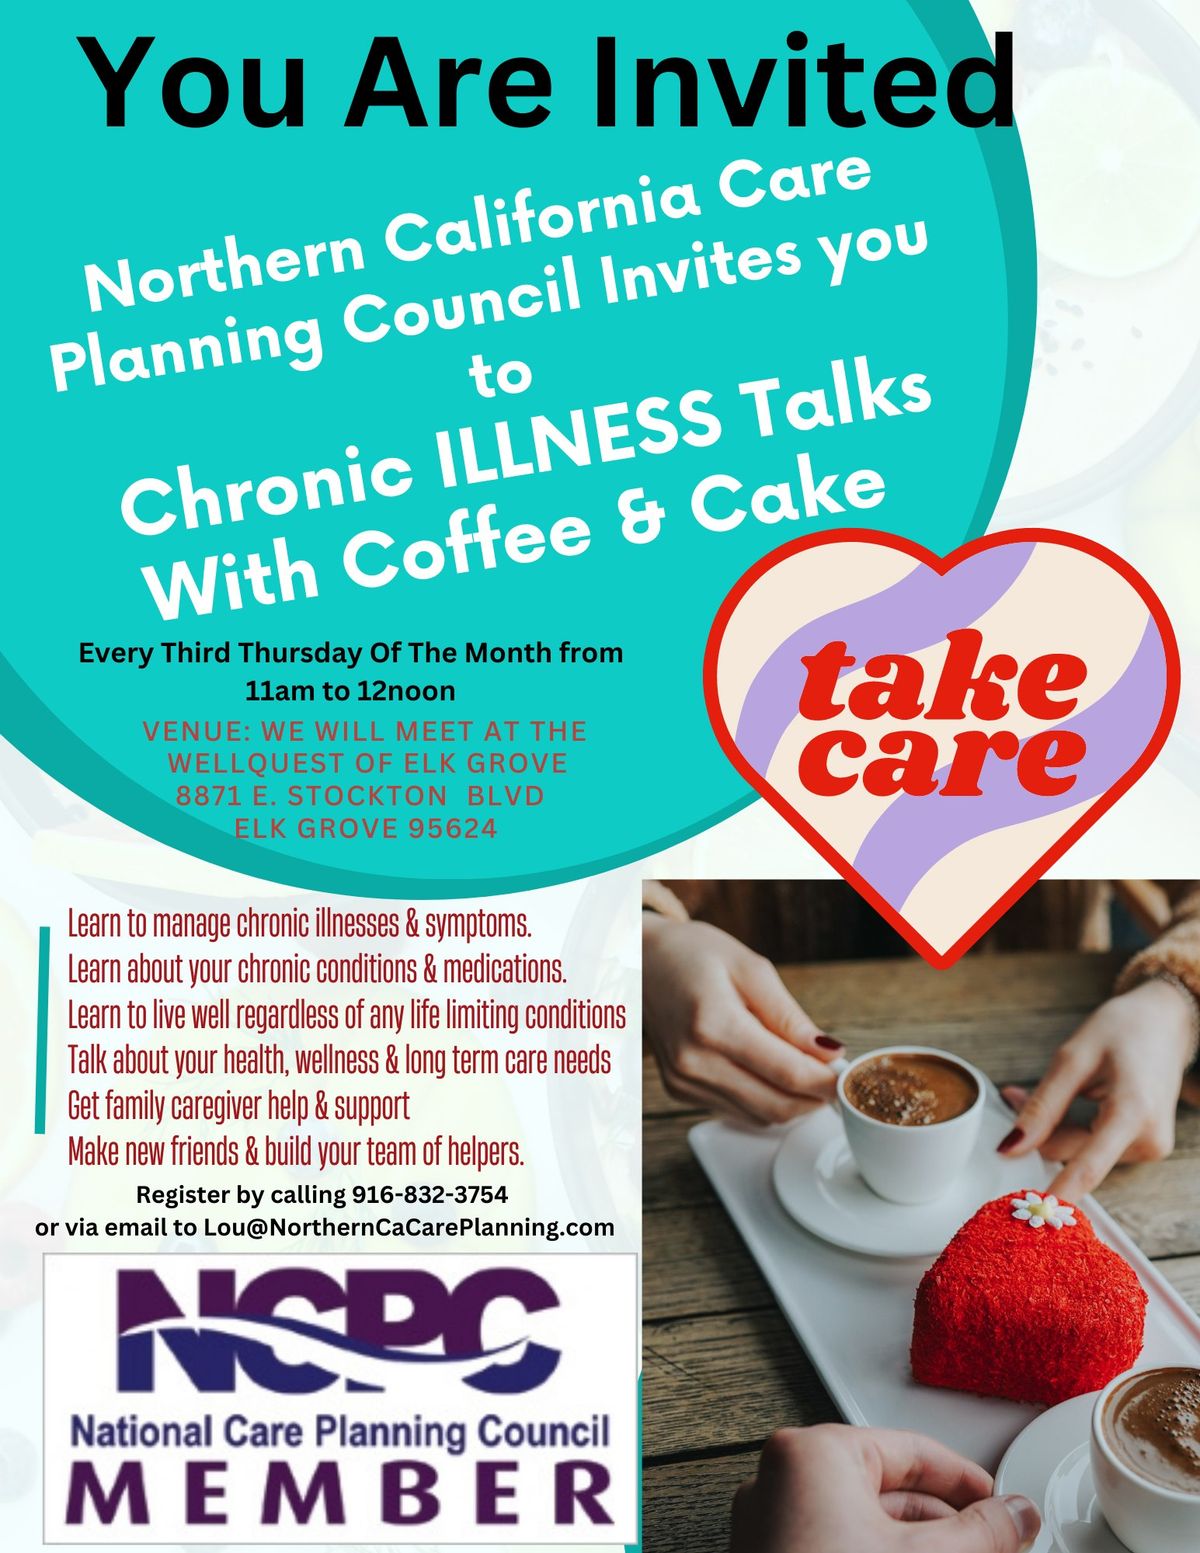 Chronic Illness Talks with Coffee & Cake